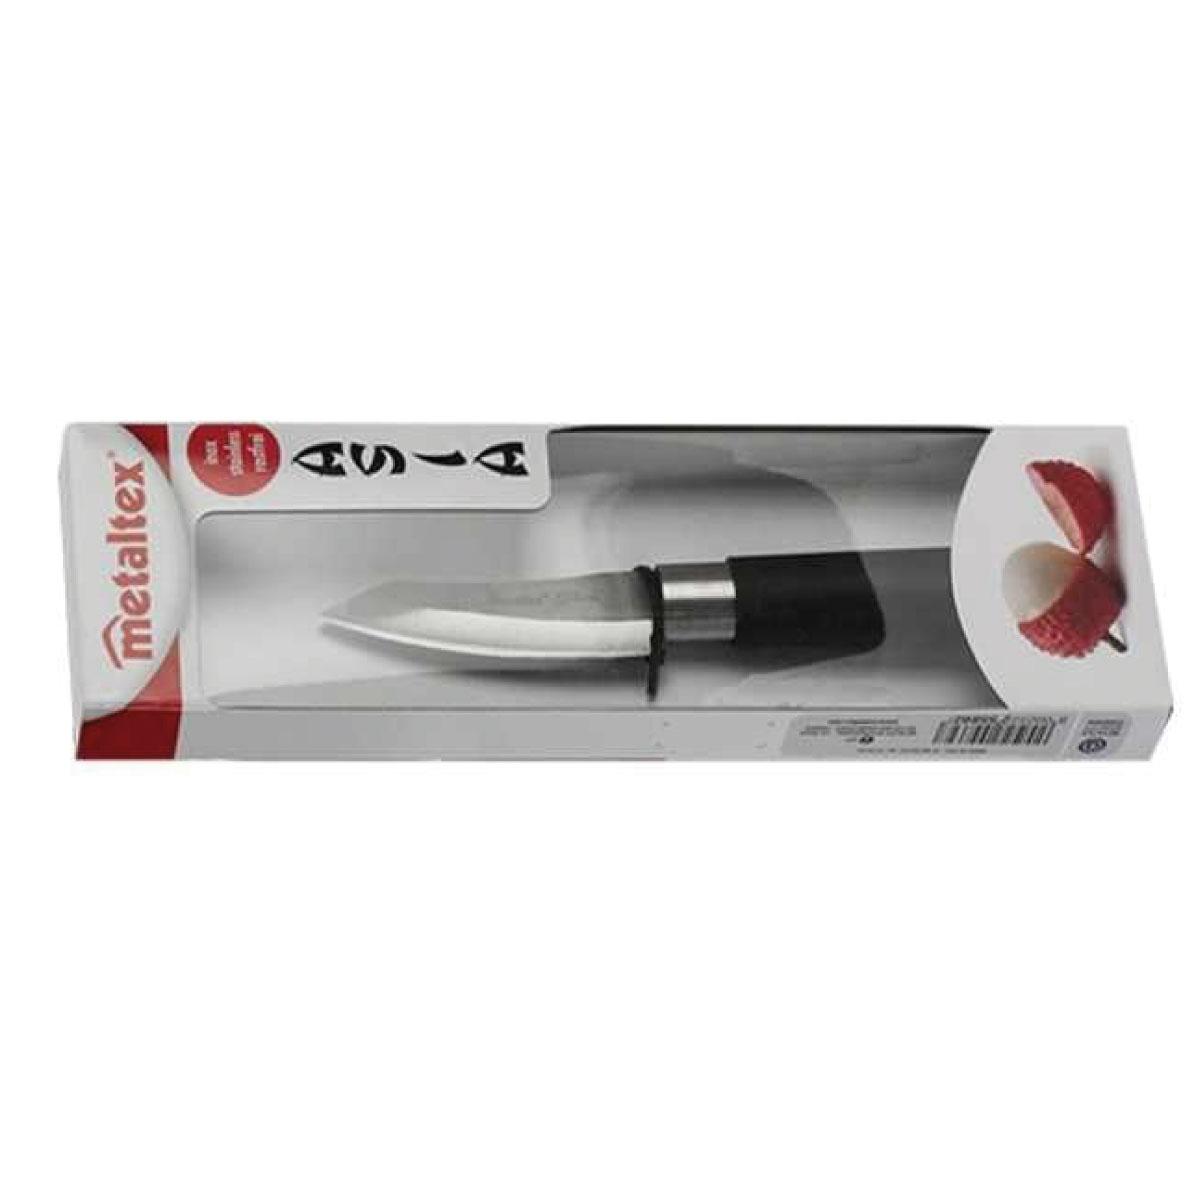 سكين مطبخ صغيرة للخضروات ستانلس ستيل 8 سم ميتالتكس Metaltex Steel Vegetable Knife Asia 8 cm